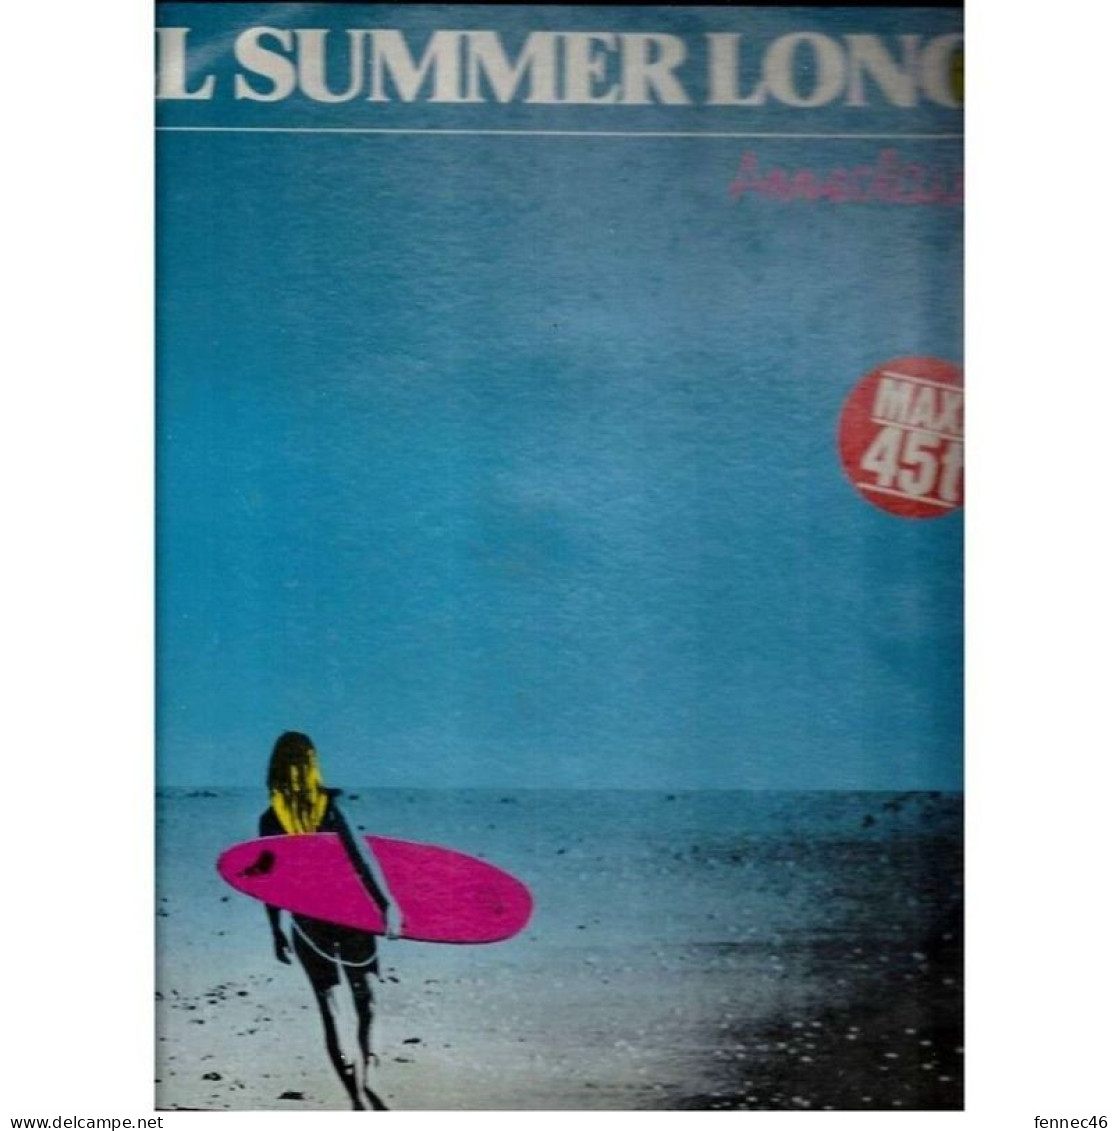 Vinyle Maxi 45T - Anne Claire All Summer Long - 45 G - Maxi-Single